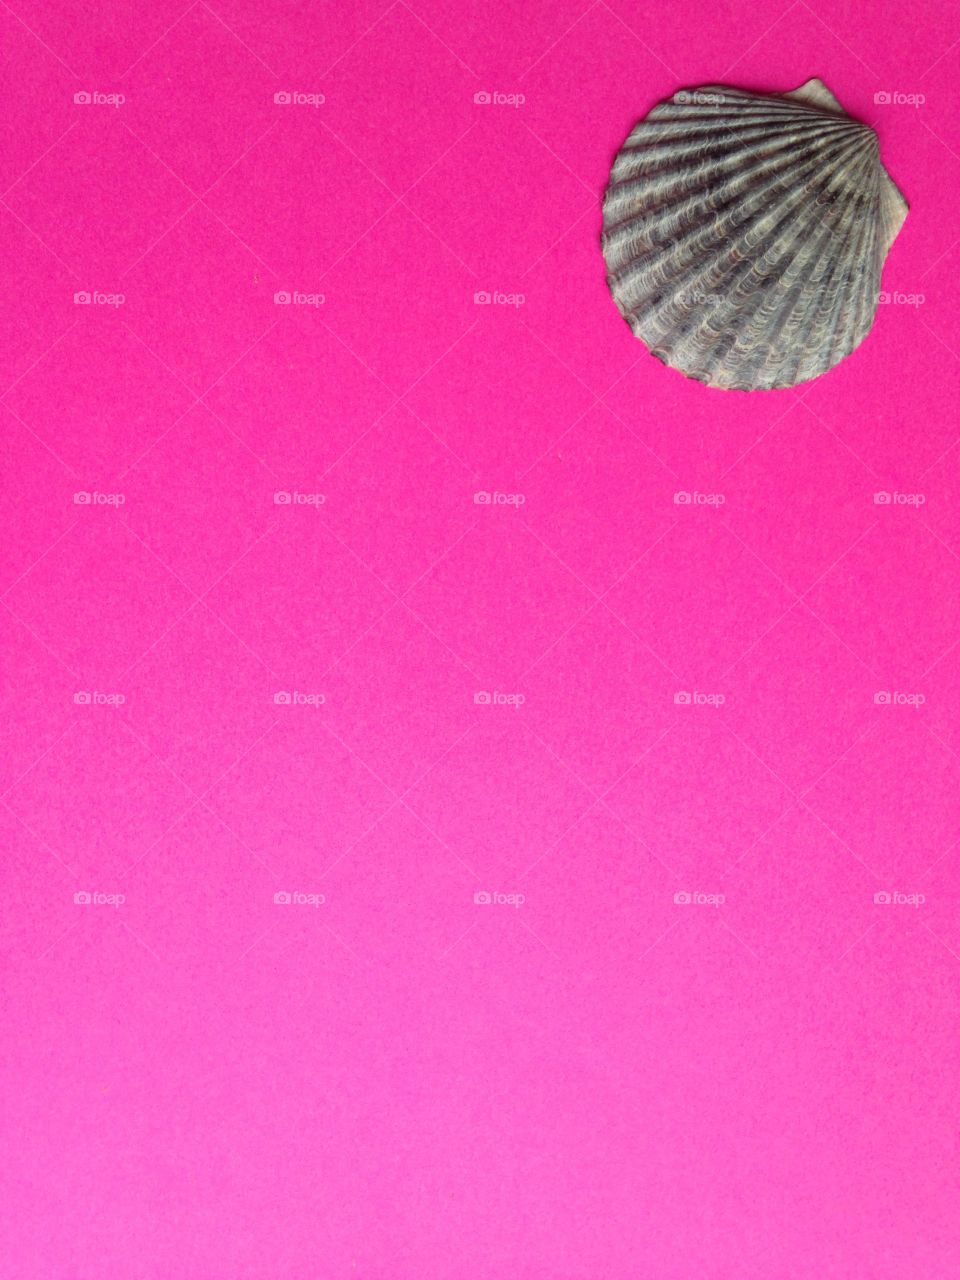 Seashell on pink background